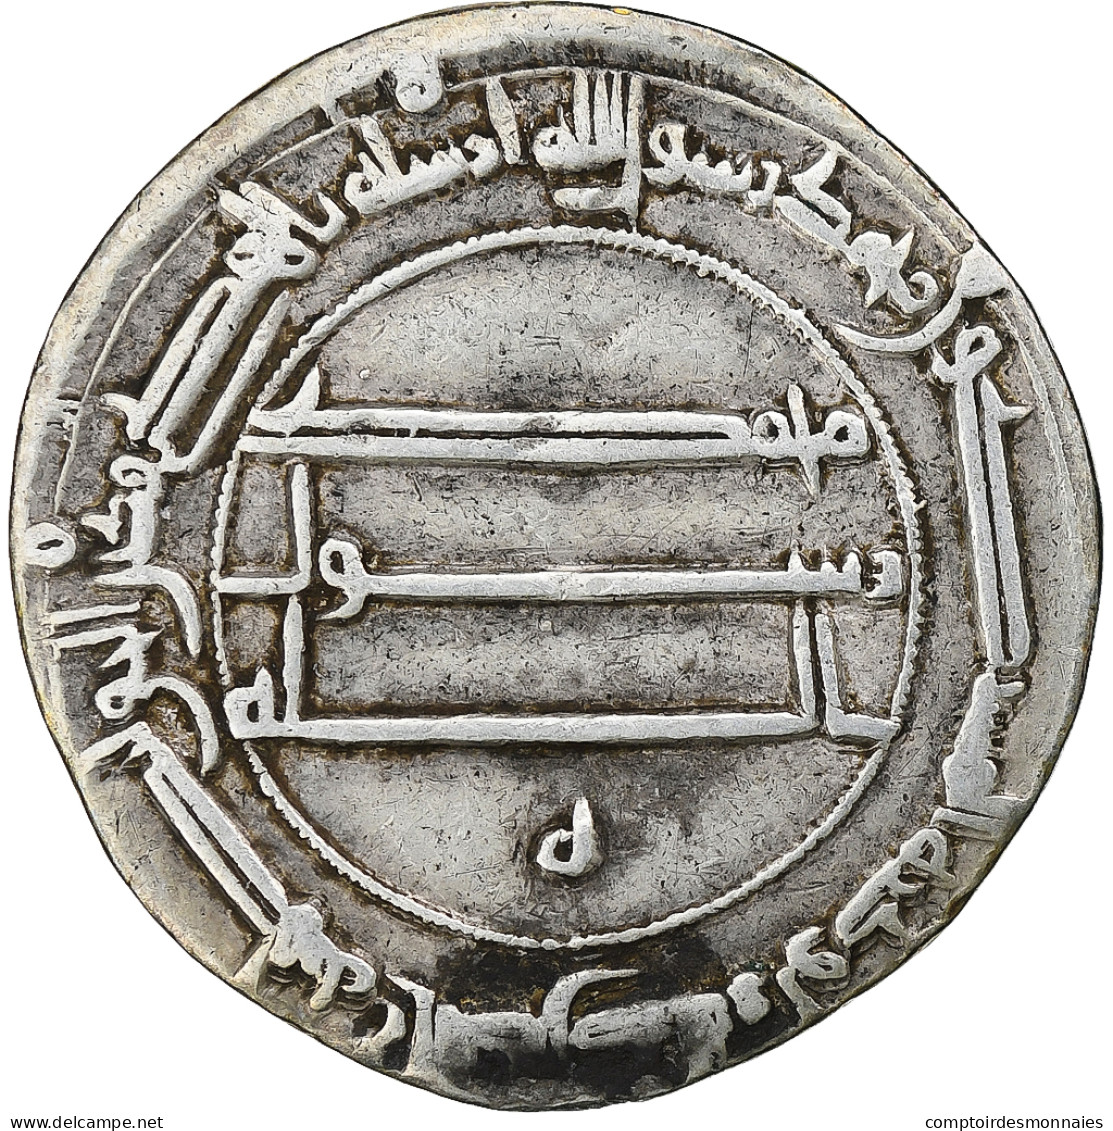 Abbasid Caliphate, Harun Al-Rashid, Dirham, AH 170-193 / 786-809, Madinat - Islamitisch